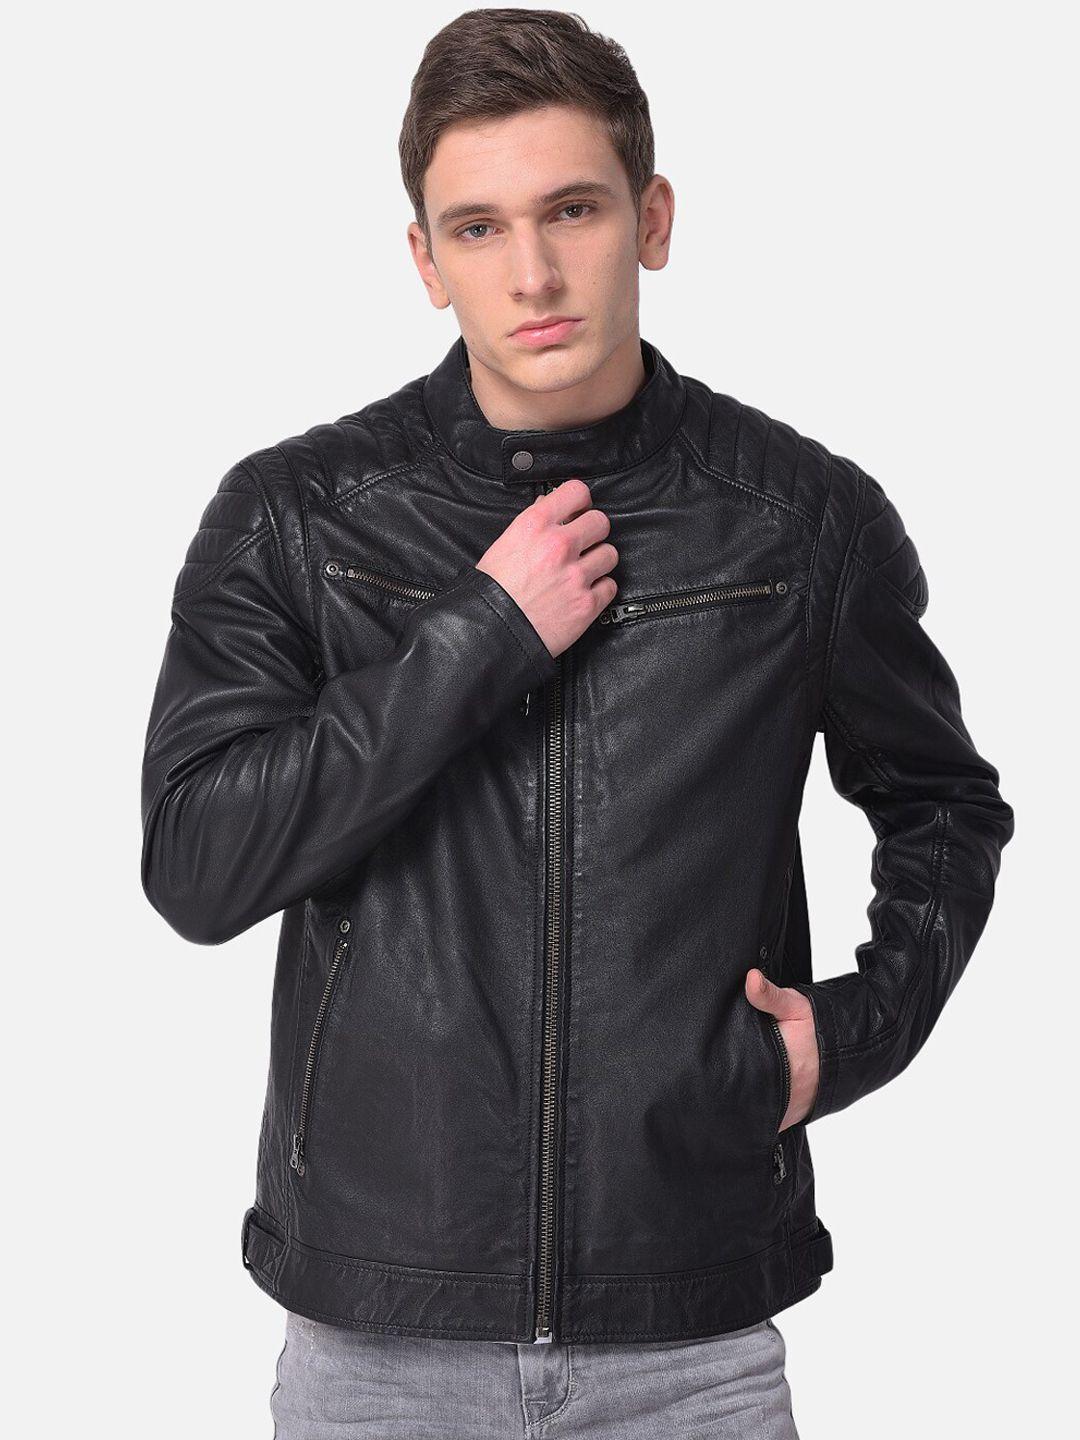 woods-men-black-leather-water-resistant-leather-jacket